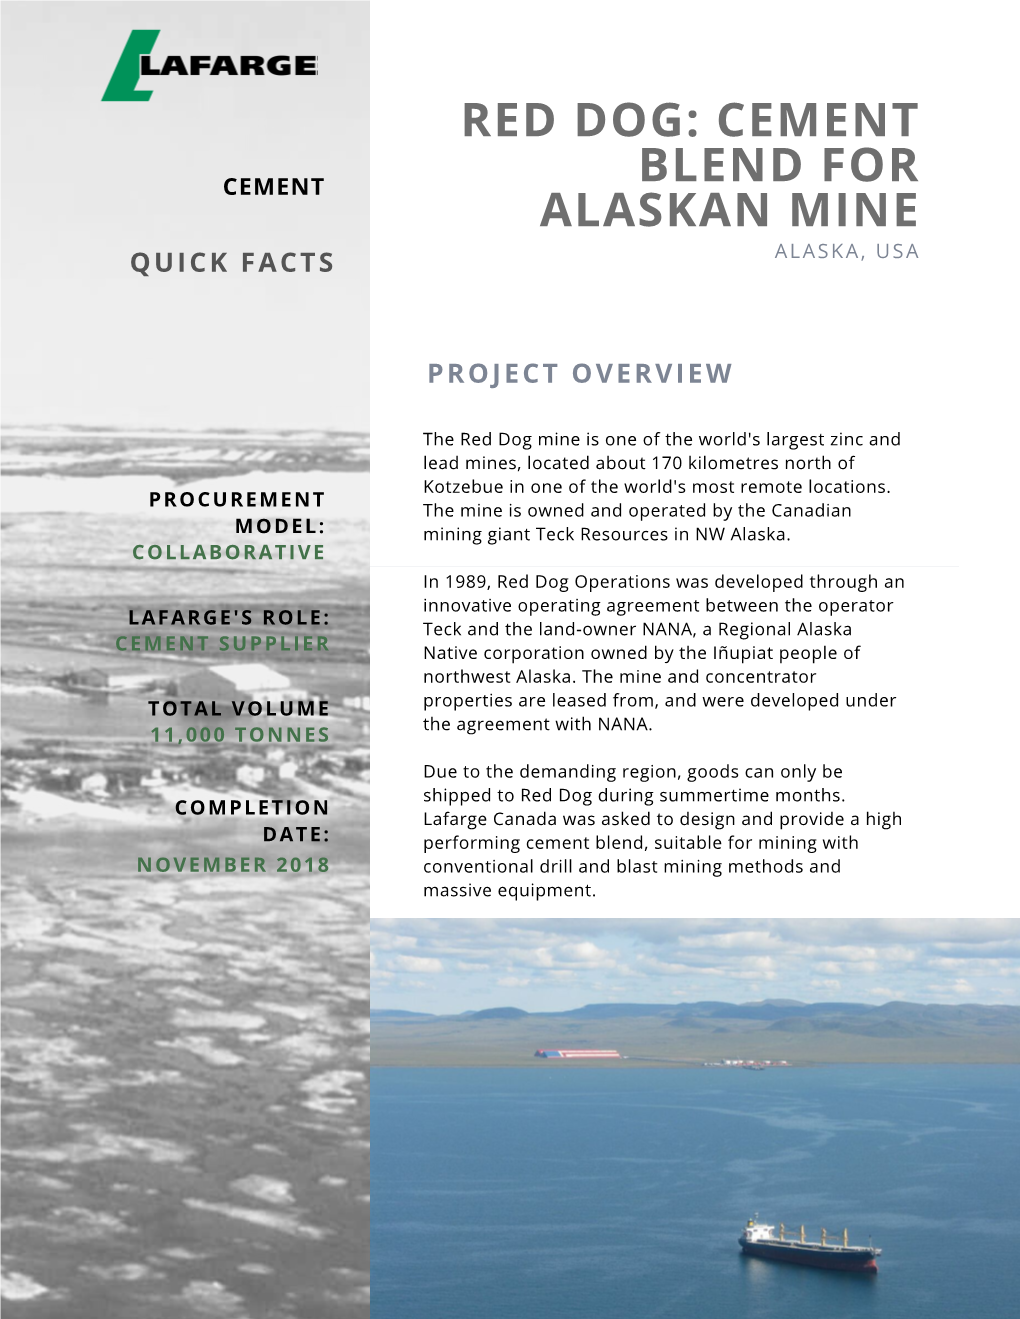 Red Dog: Cement Blend for Alaskan Mine